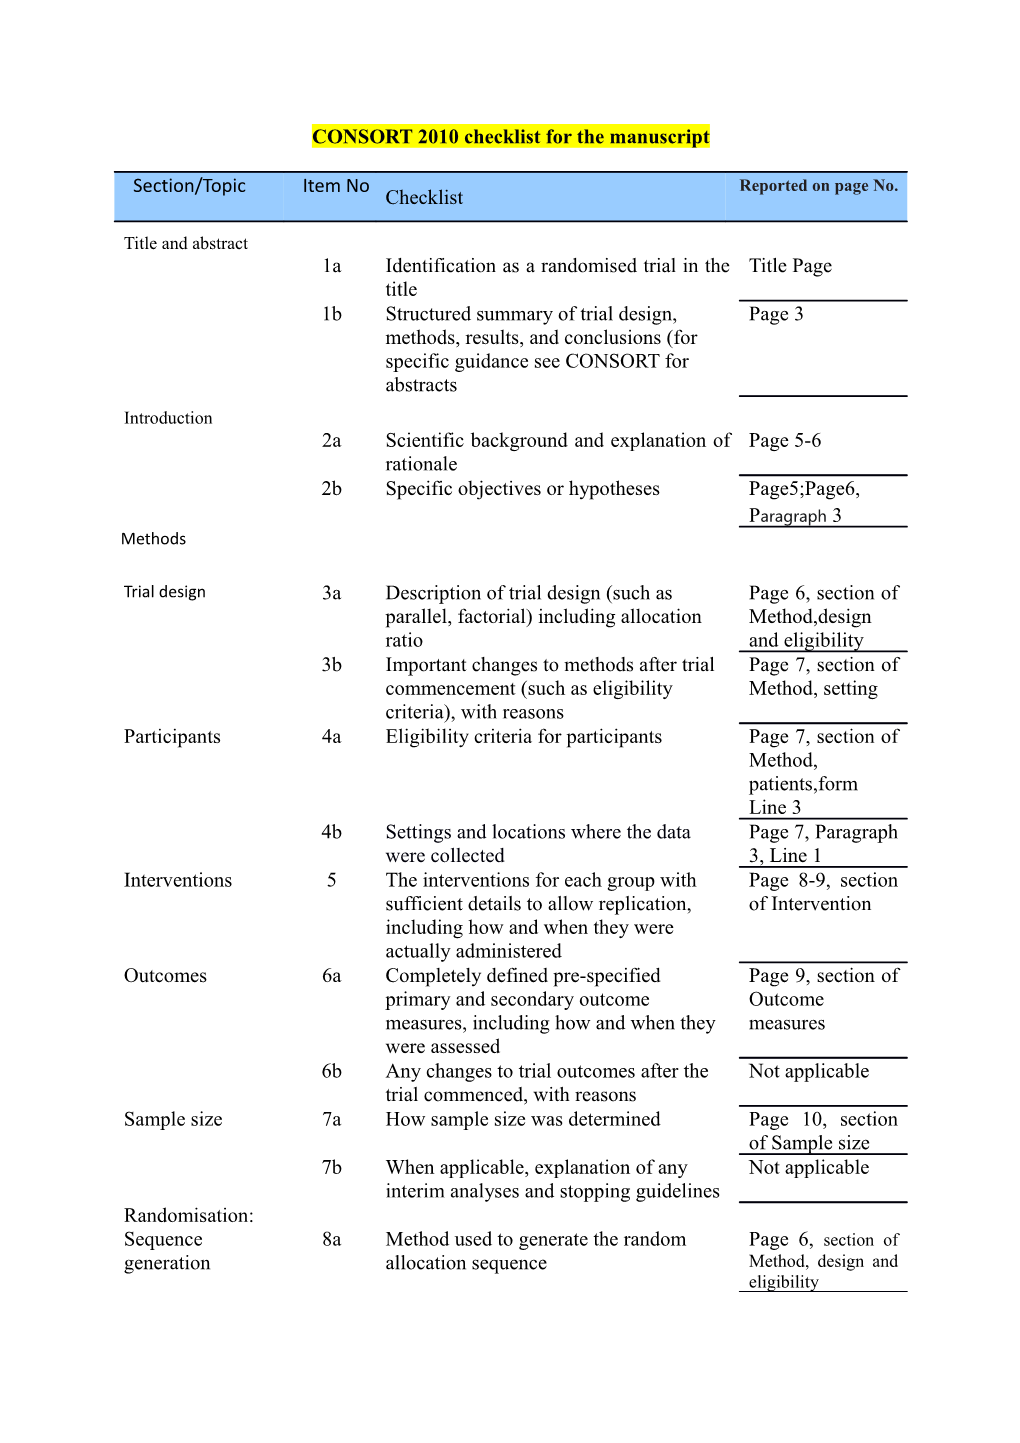 CONSORT 2010 Checklist for the Manuscript